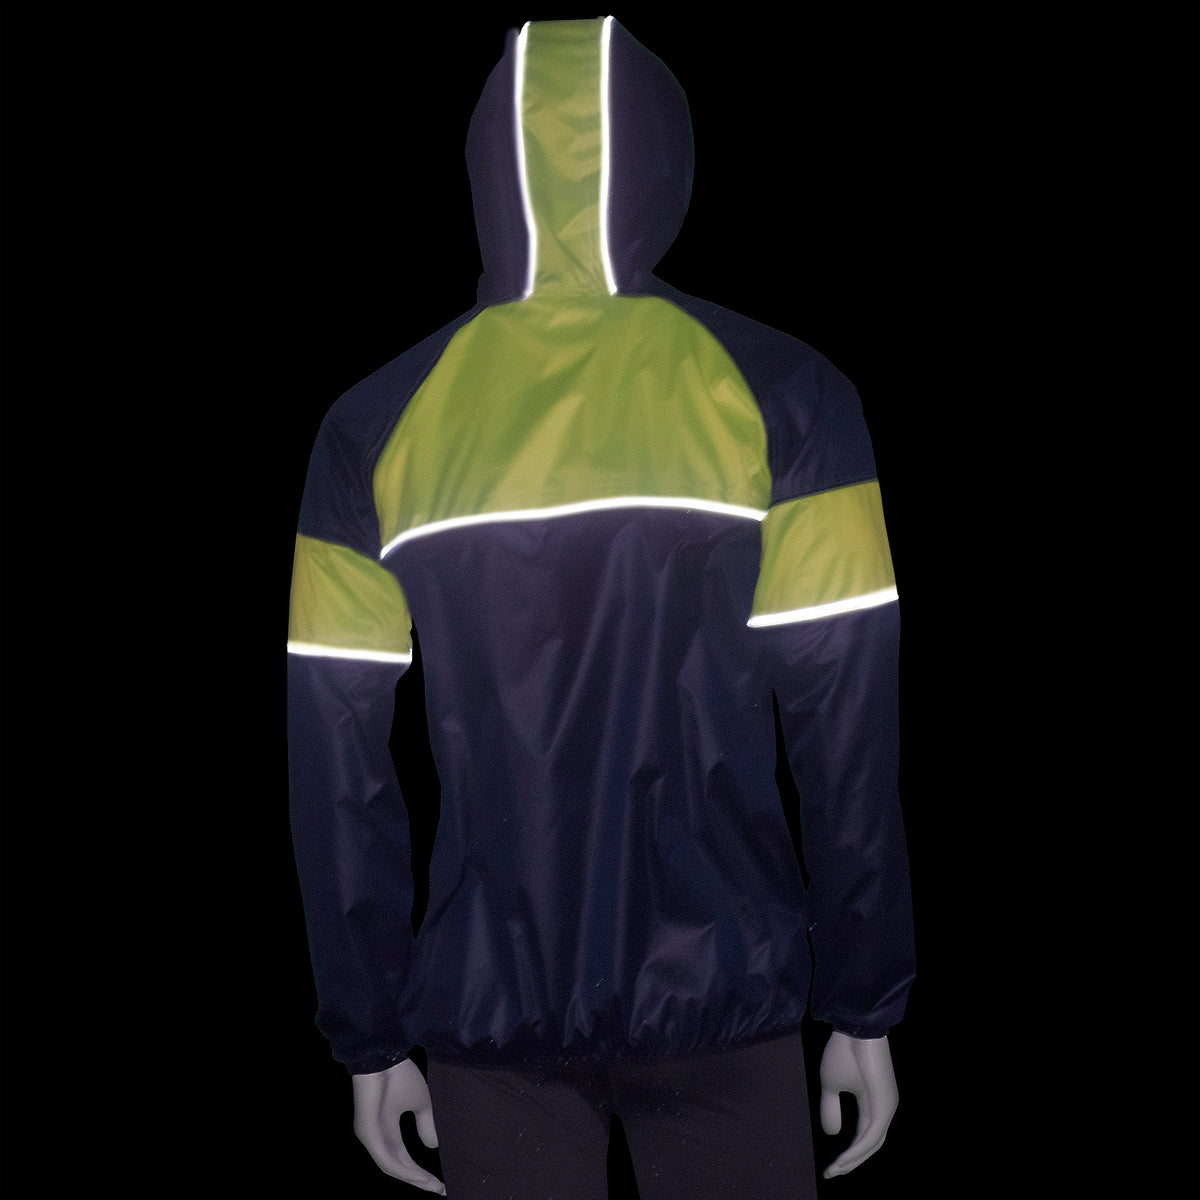 illumiNITE Men's Reflective Flurry Jacket